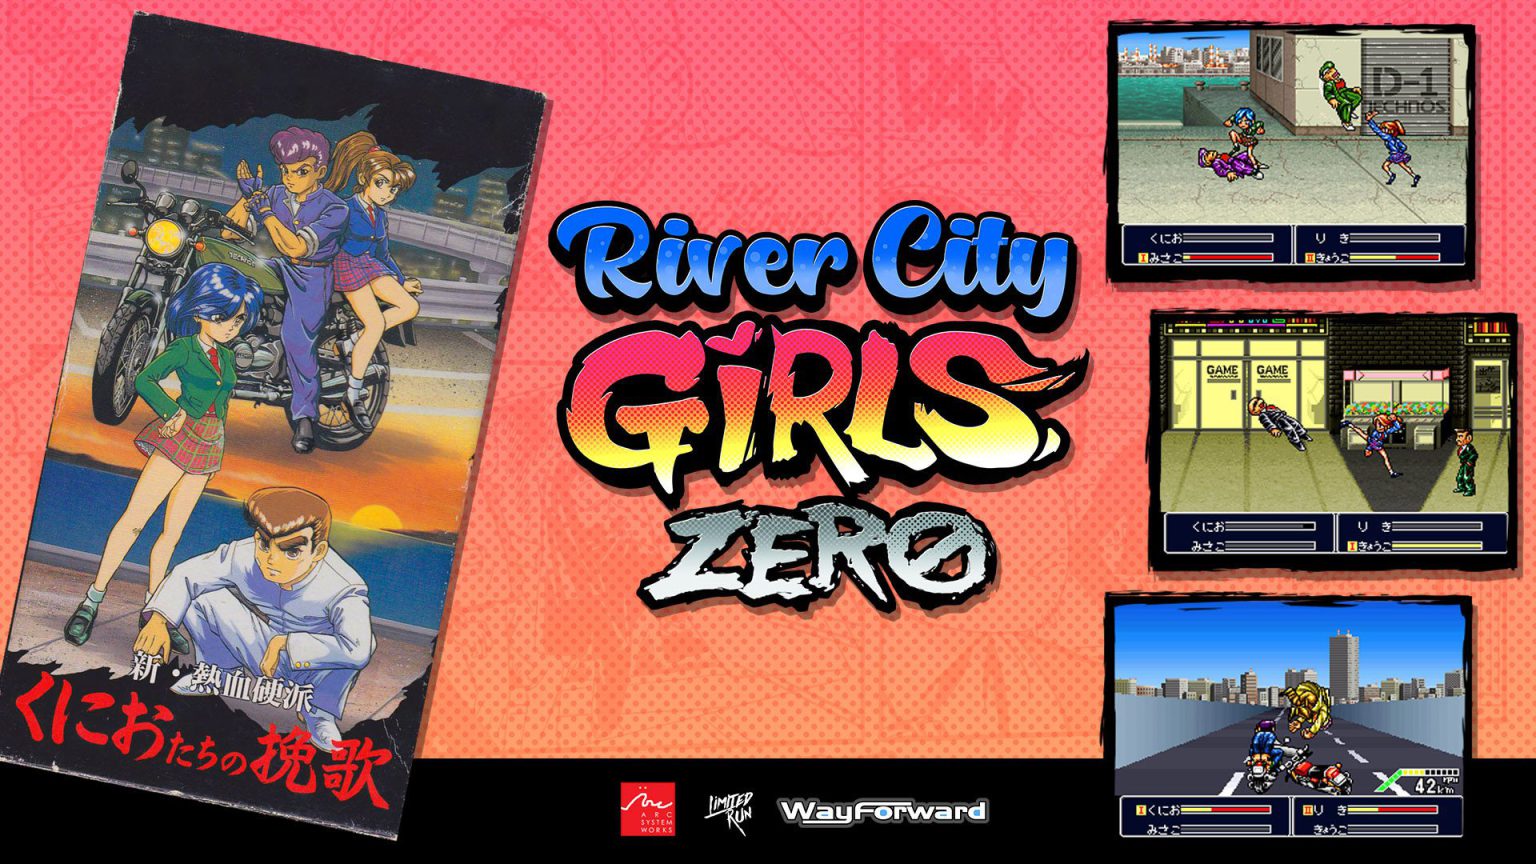 river city girls zero - generacion xbox